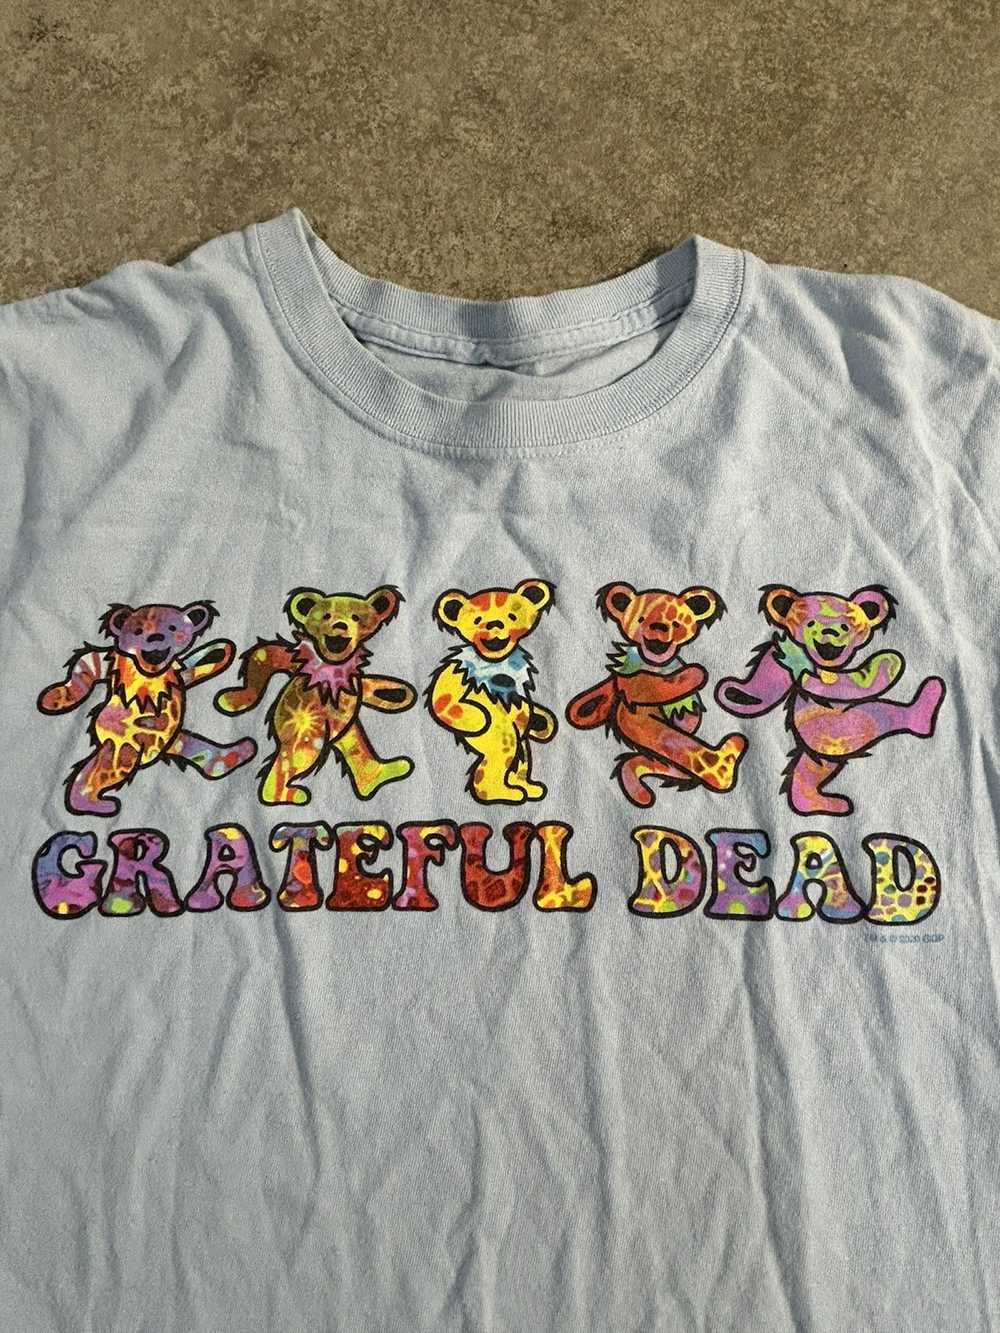 Streetwear × Vintage Greatful dead bears tshirt - image 2